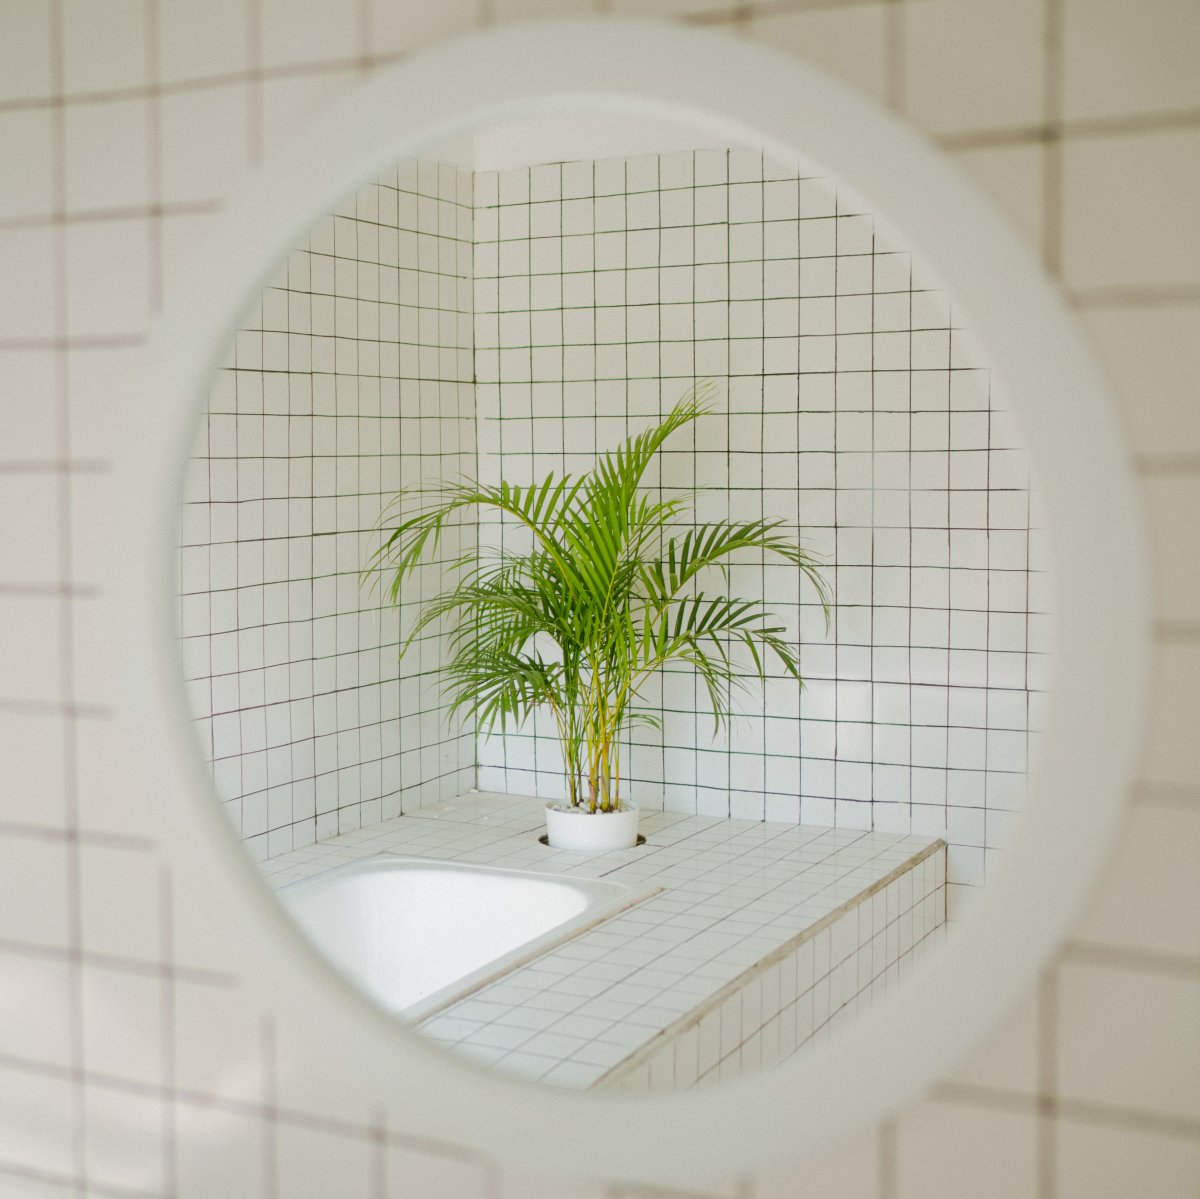 Tips for Selecting Bathroom Tile